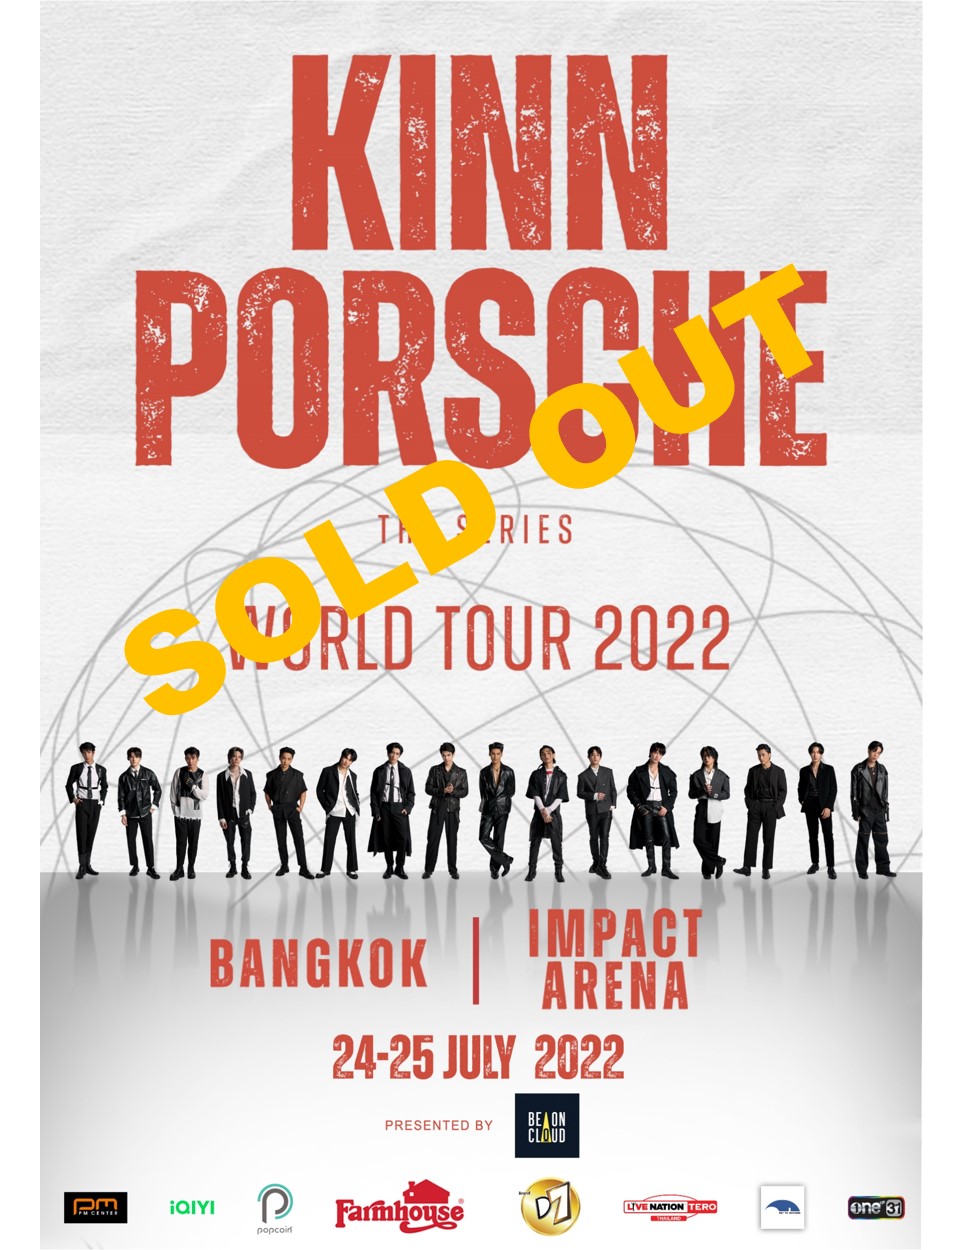 kinnporsche world tour malaysia